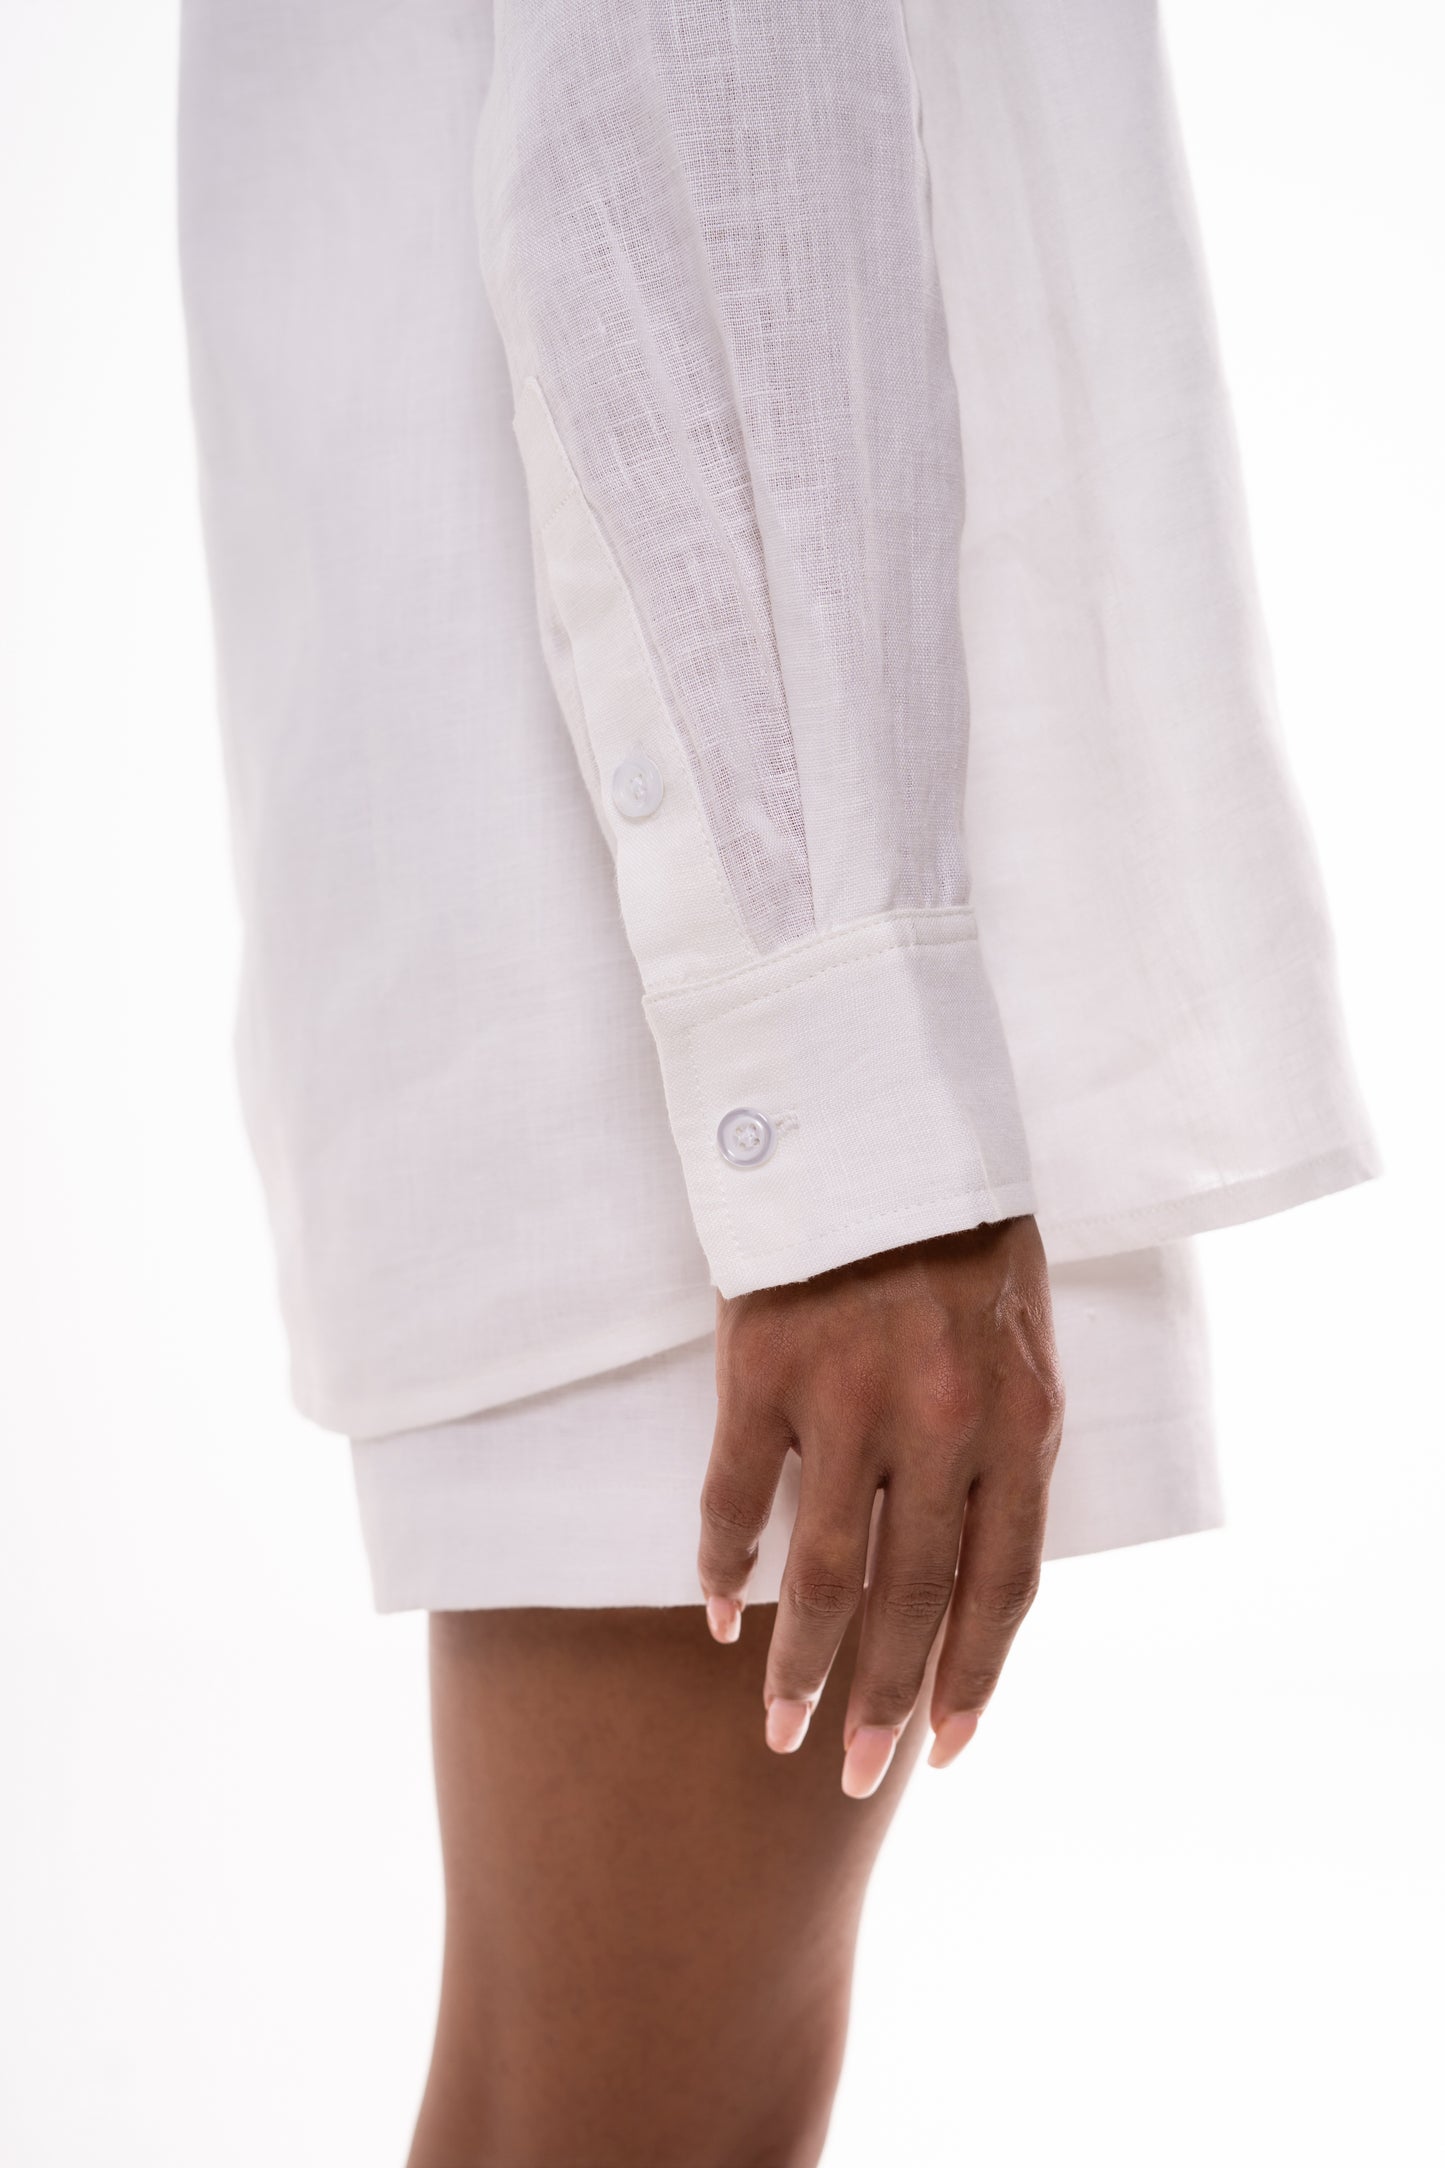 B - Classic White Linen Shirt